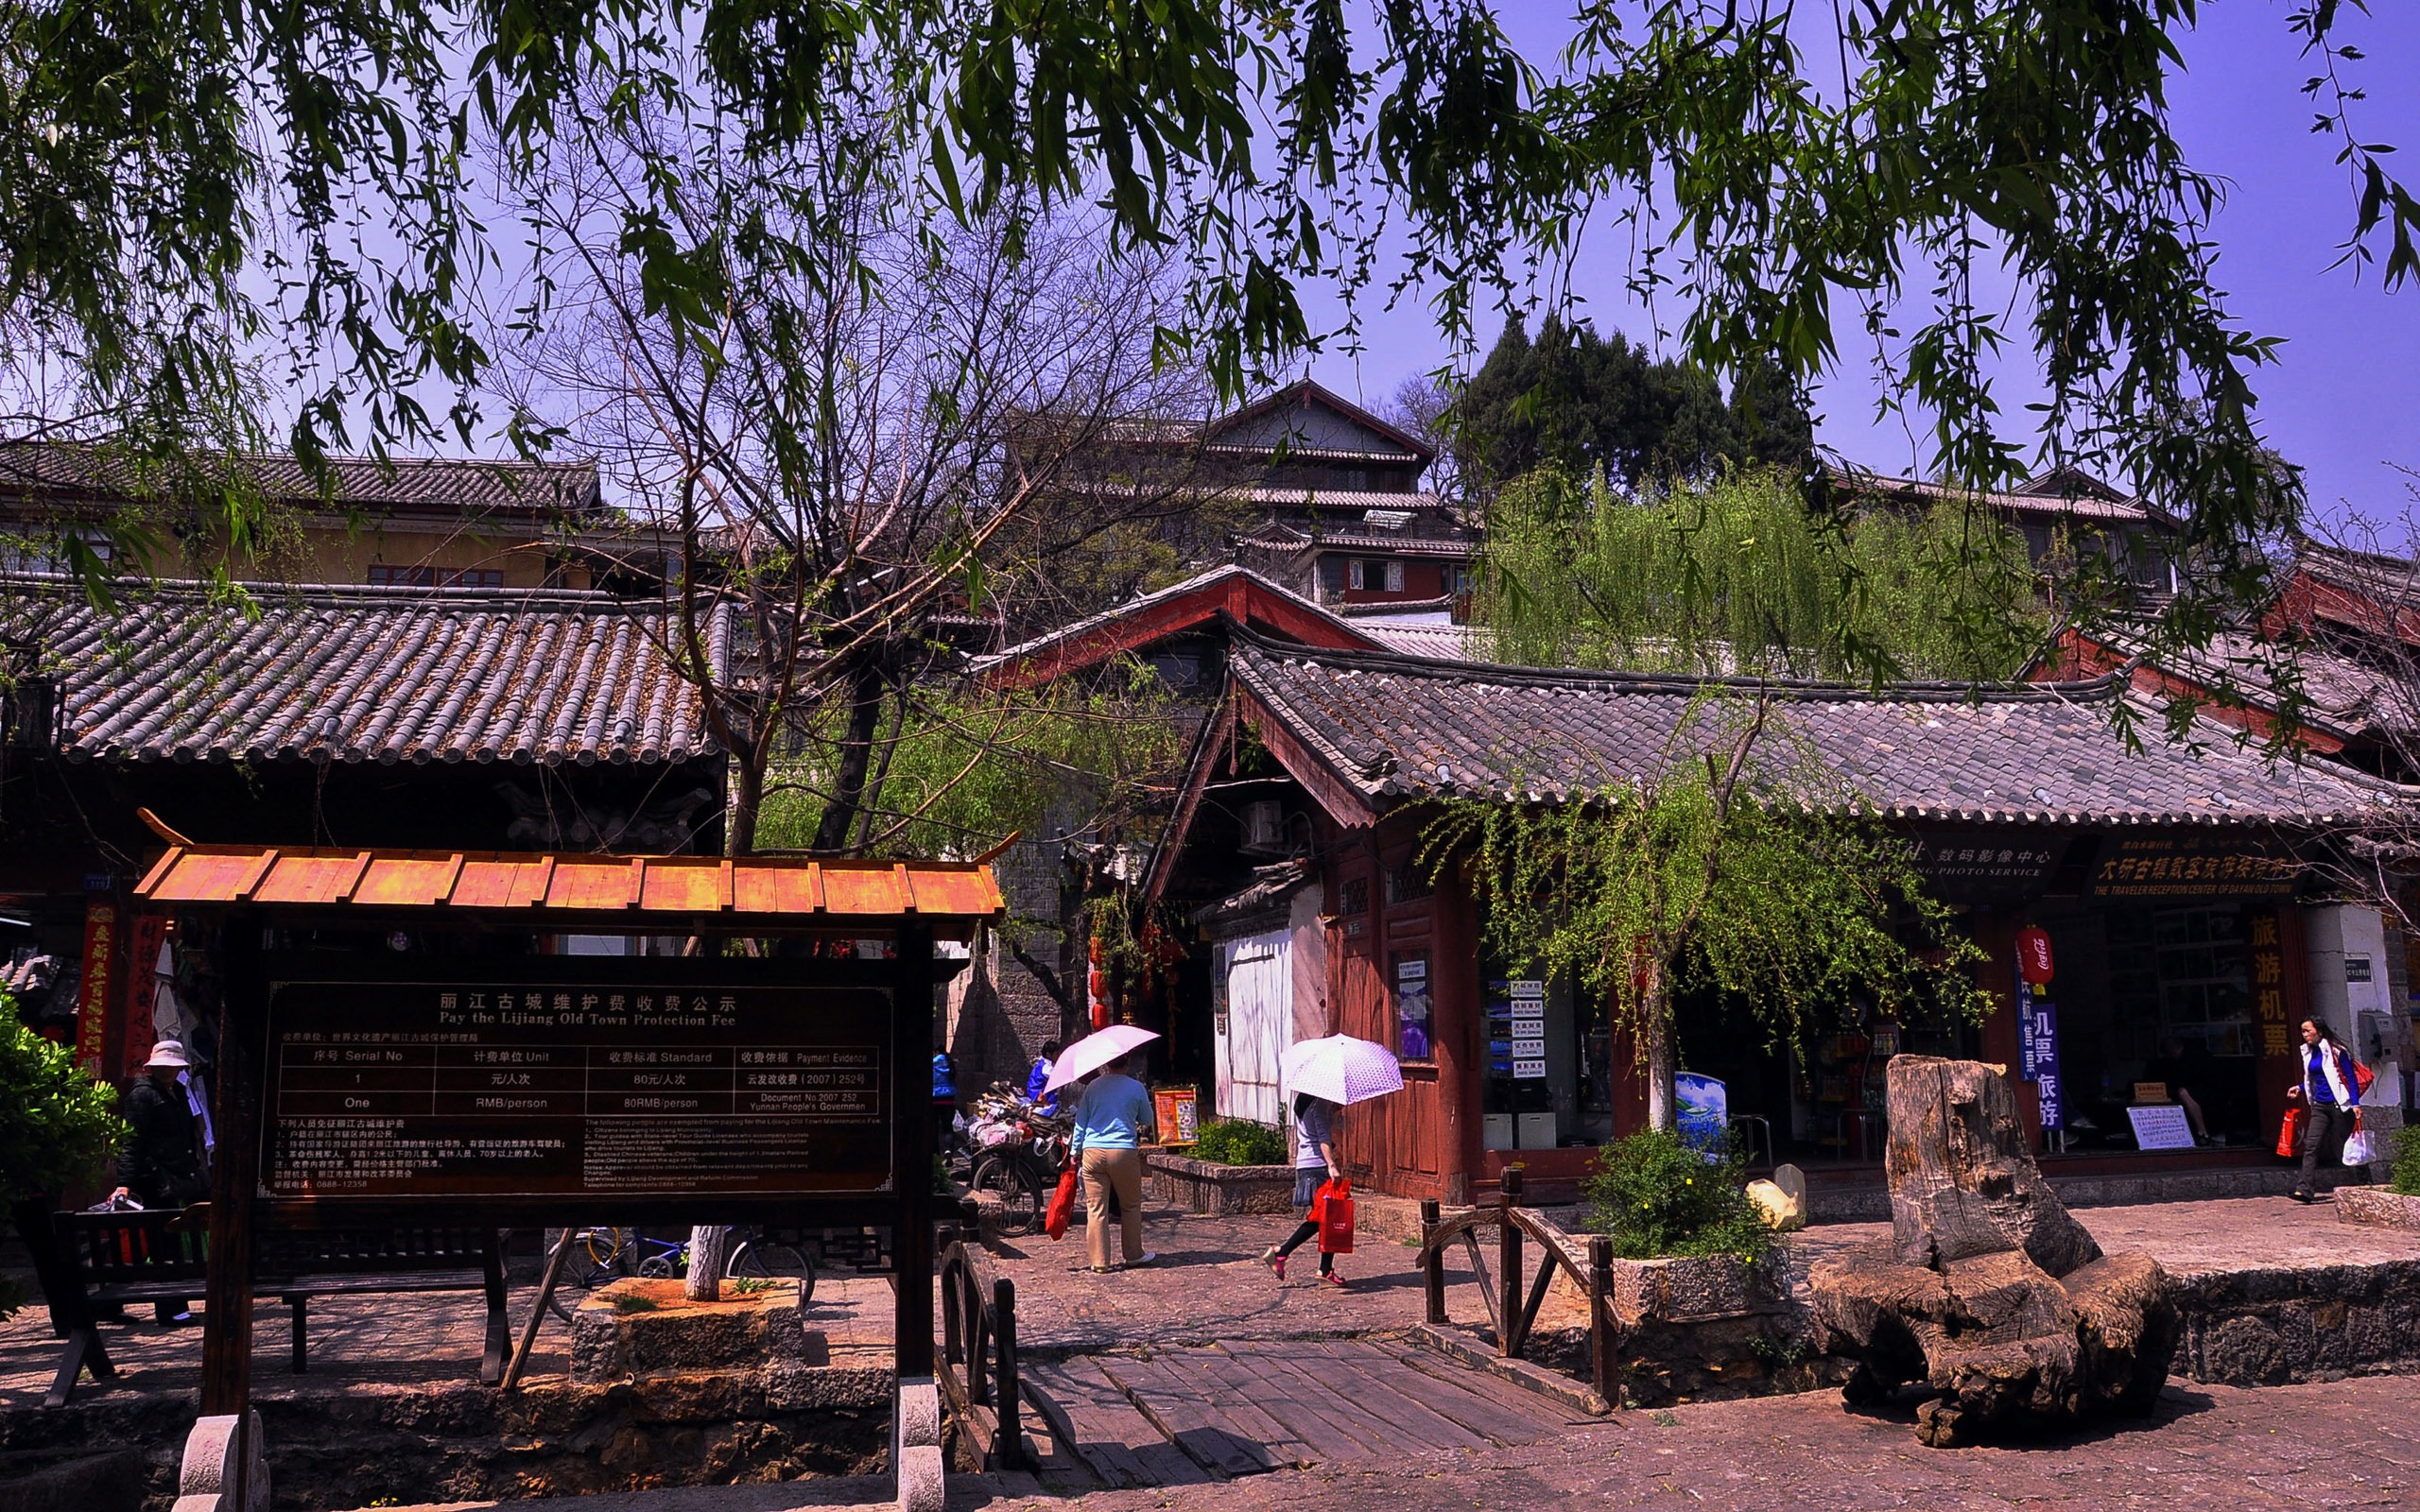 Lijiang ancient town atmosphere (2) (old Hong OK works) #26 - 2560x1600